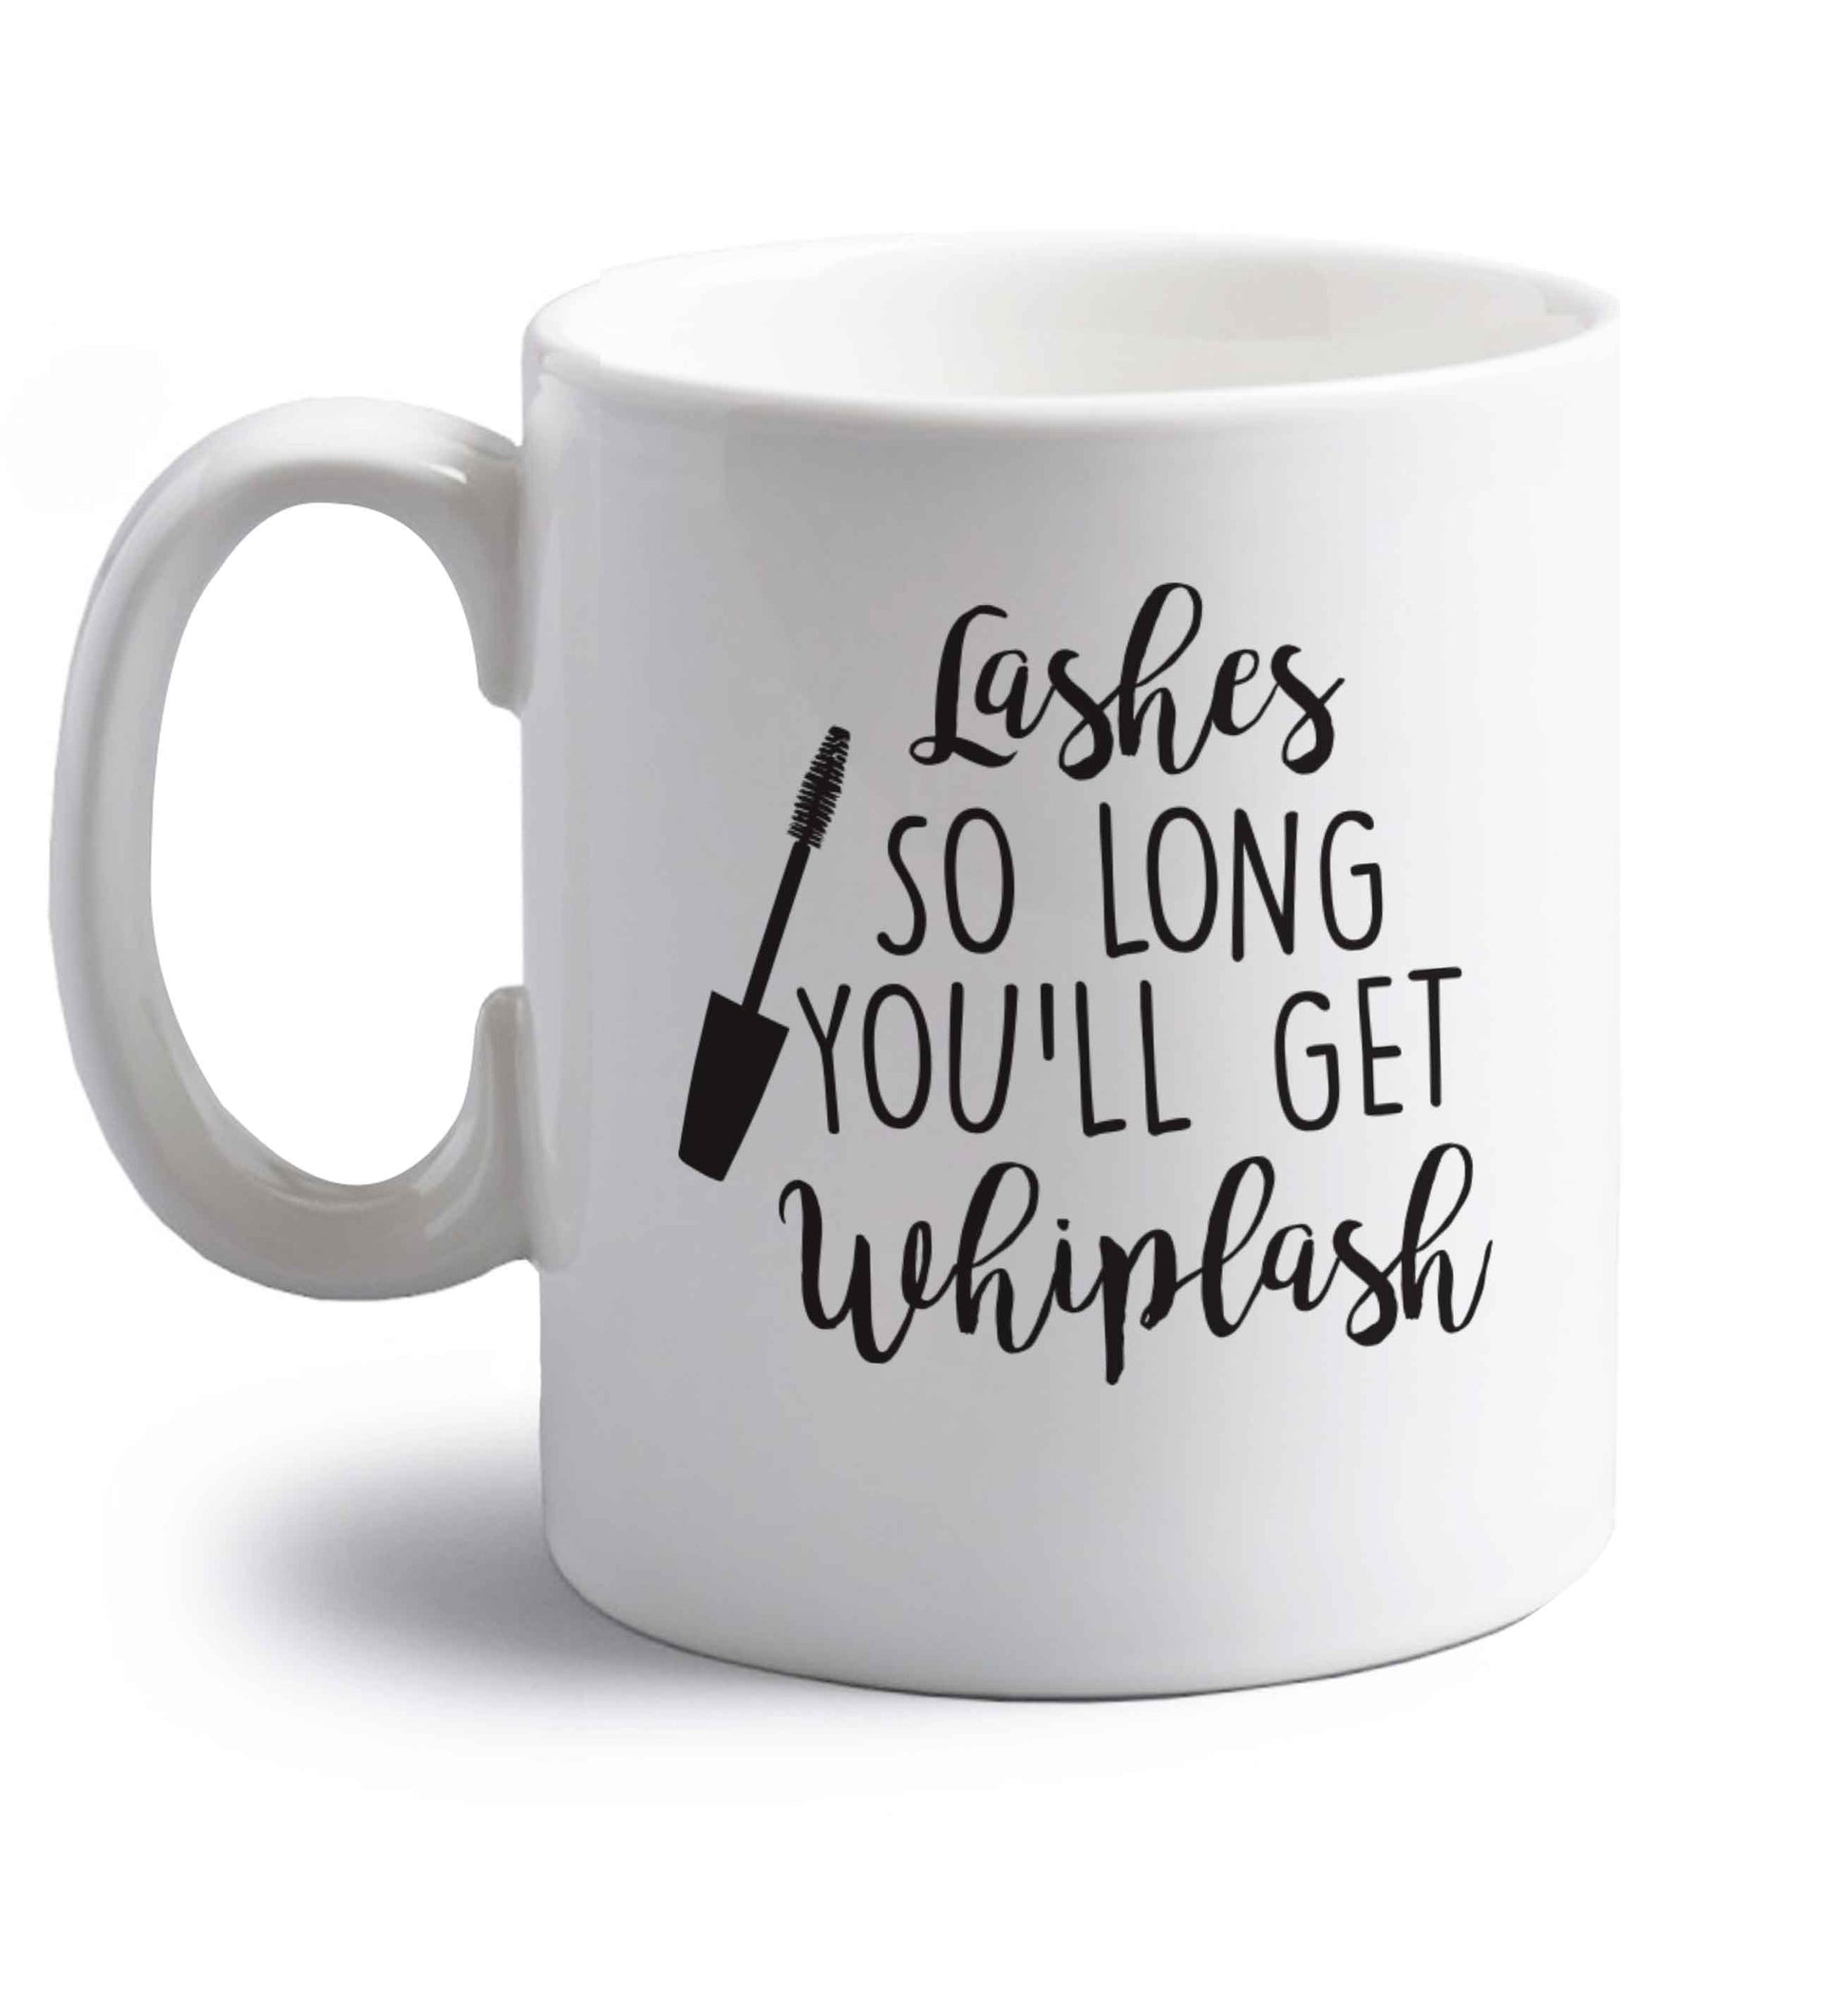 Lashes so long you'll get whiplash right handed white ceramic mug 